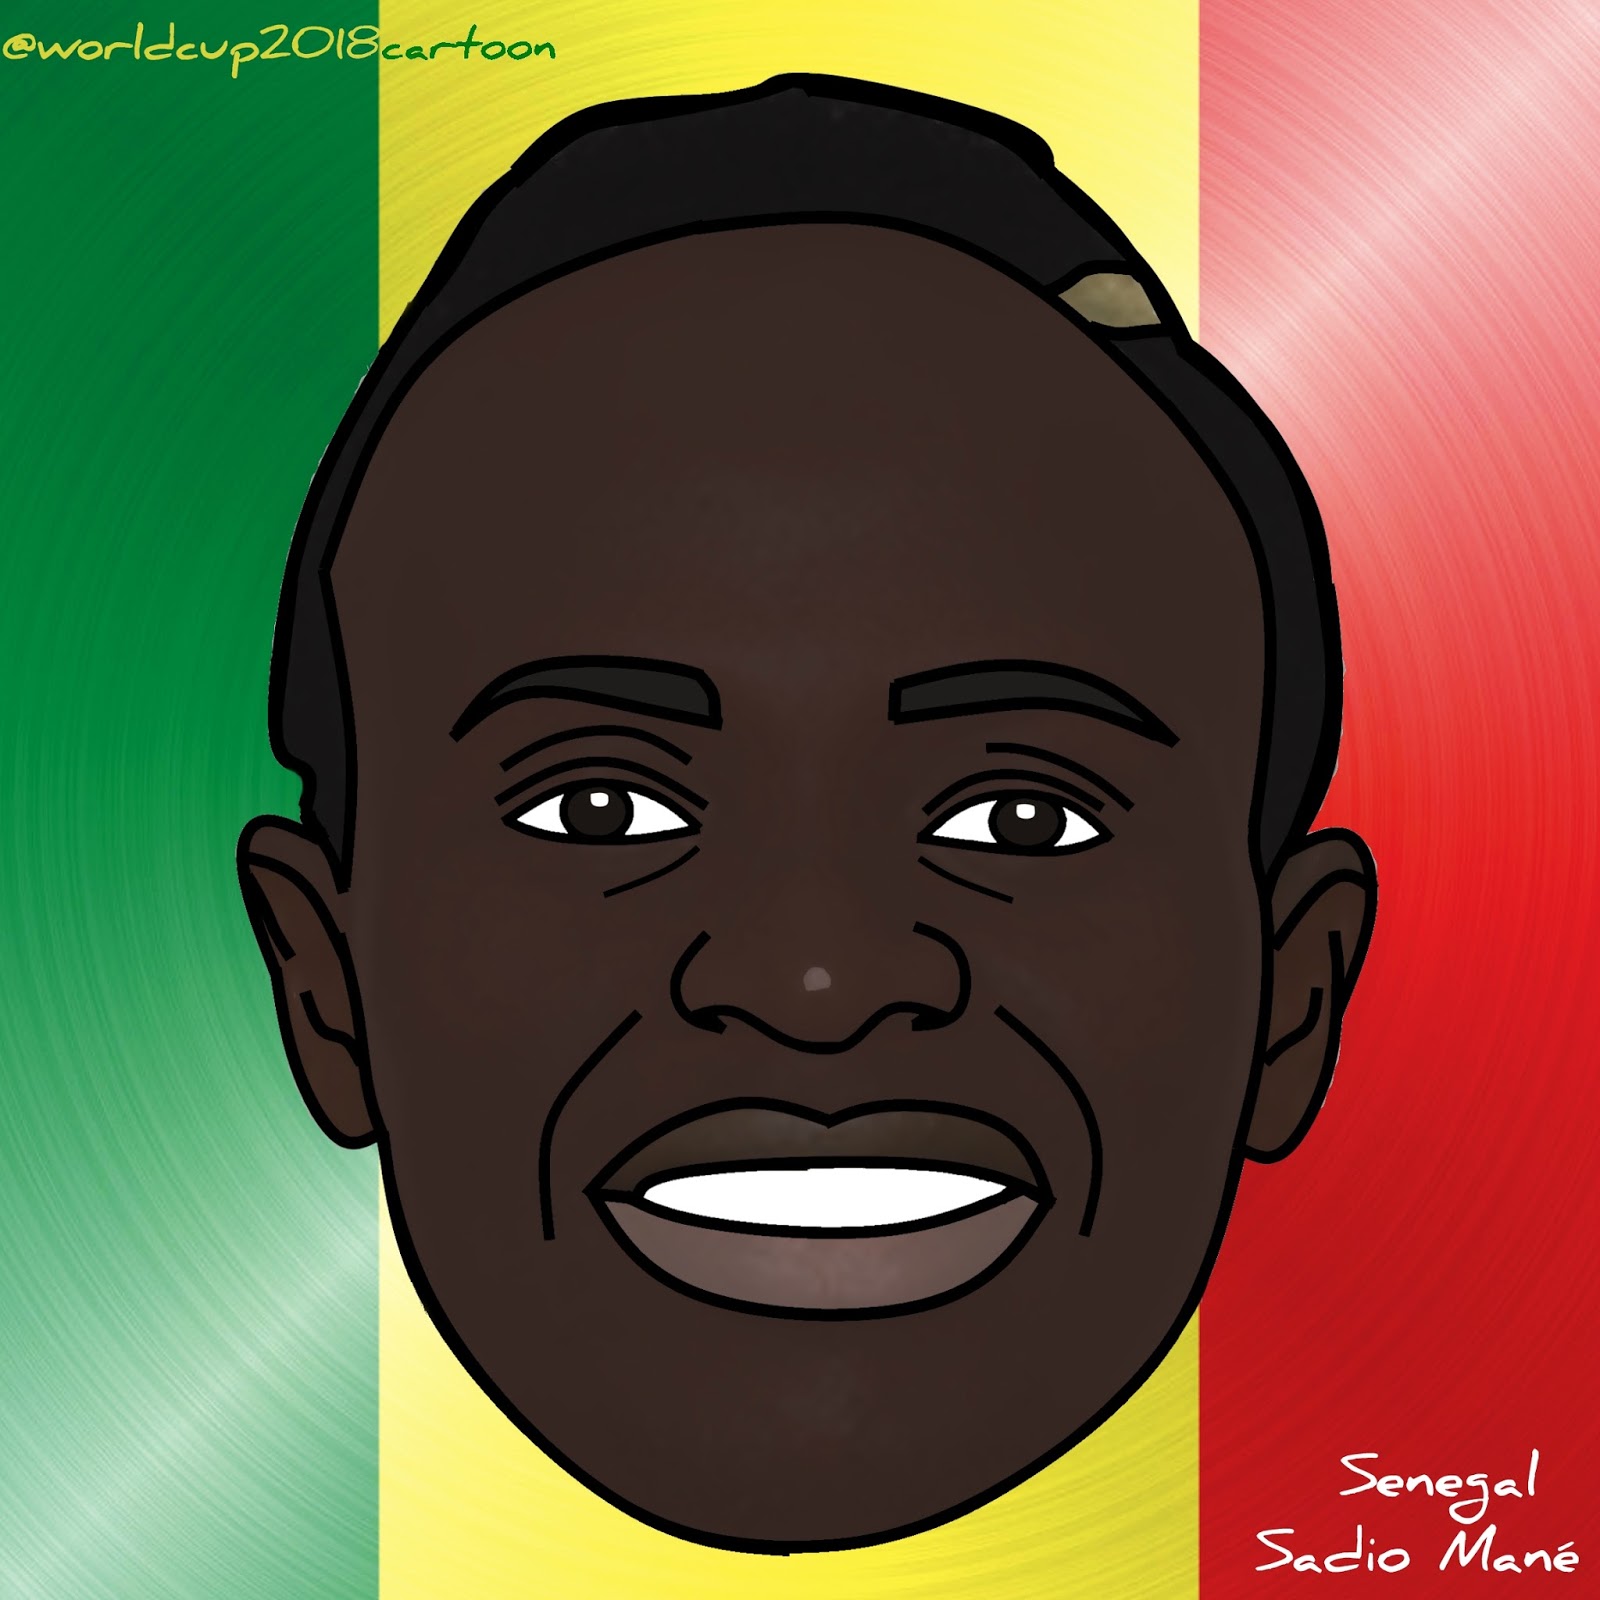 Ilqar Novruzov Cartoon: Sadio Mané Cartoon Senegal World Cup 2018